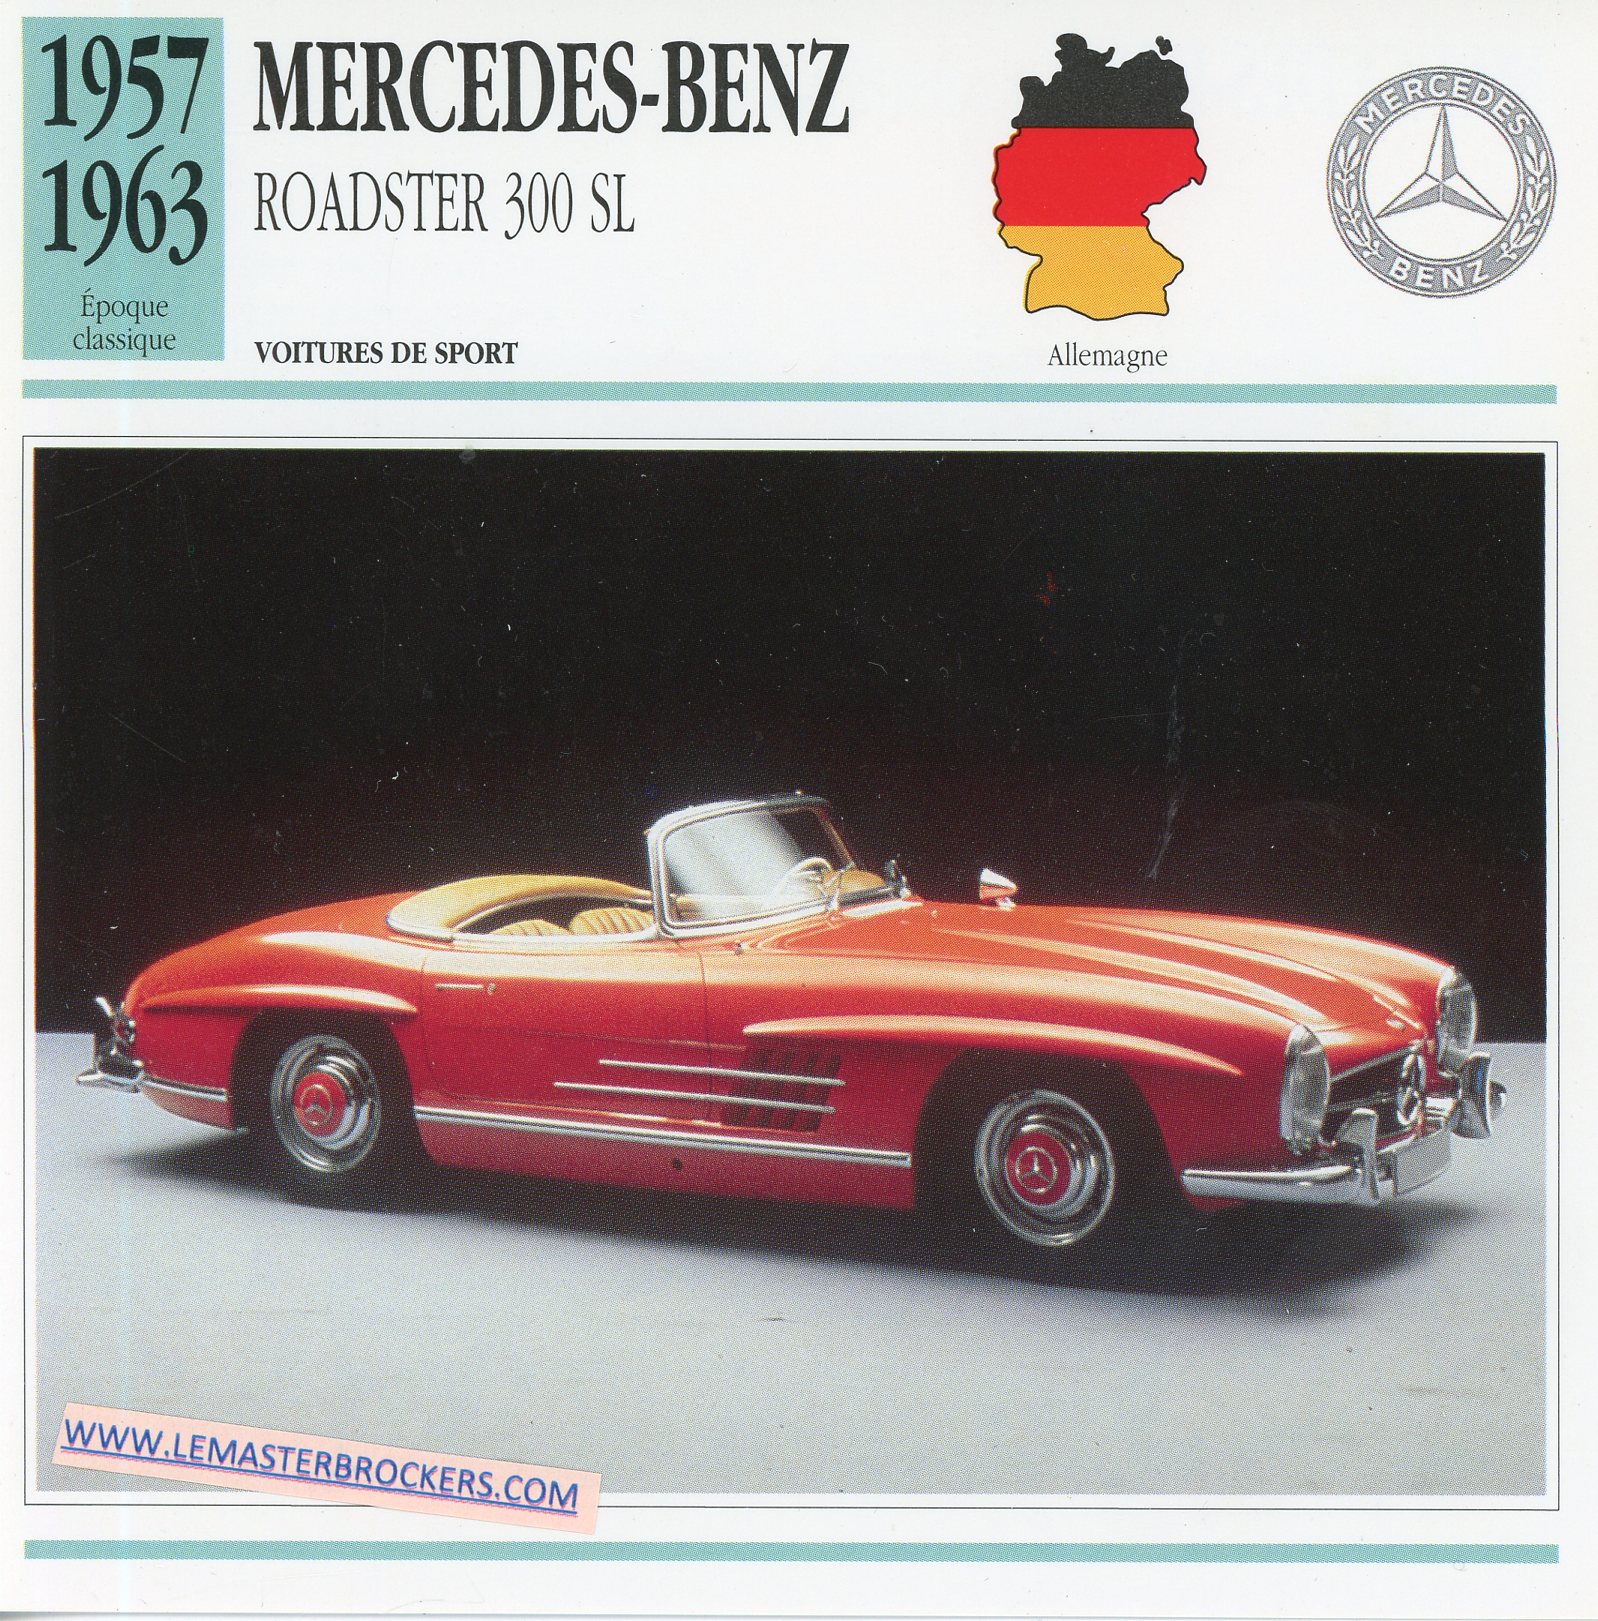 FICHE-AUTO-ATLAS-MERCEDES-BENZ-300SL-ROADSTER-1957-1963-LEMASTERBROCKERS-CARD-CARS